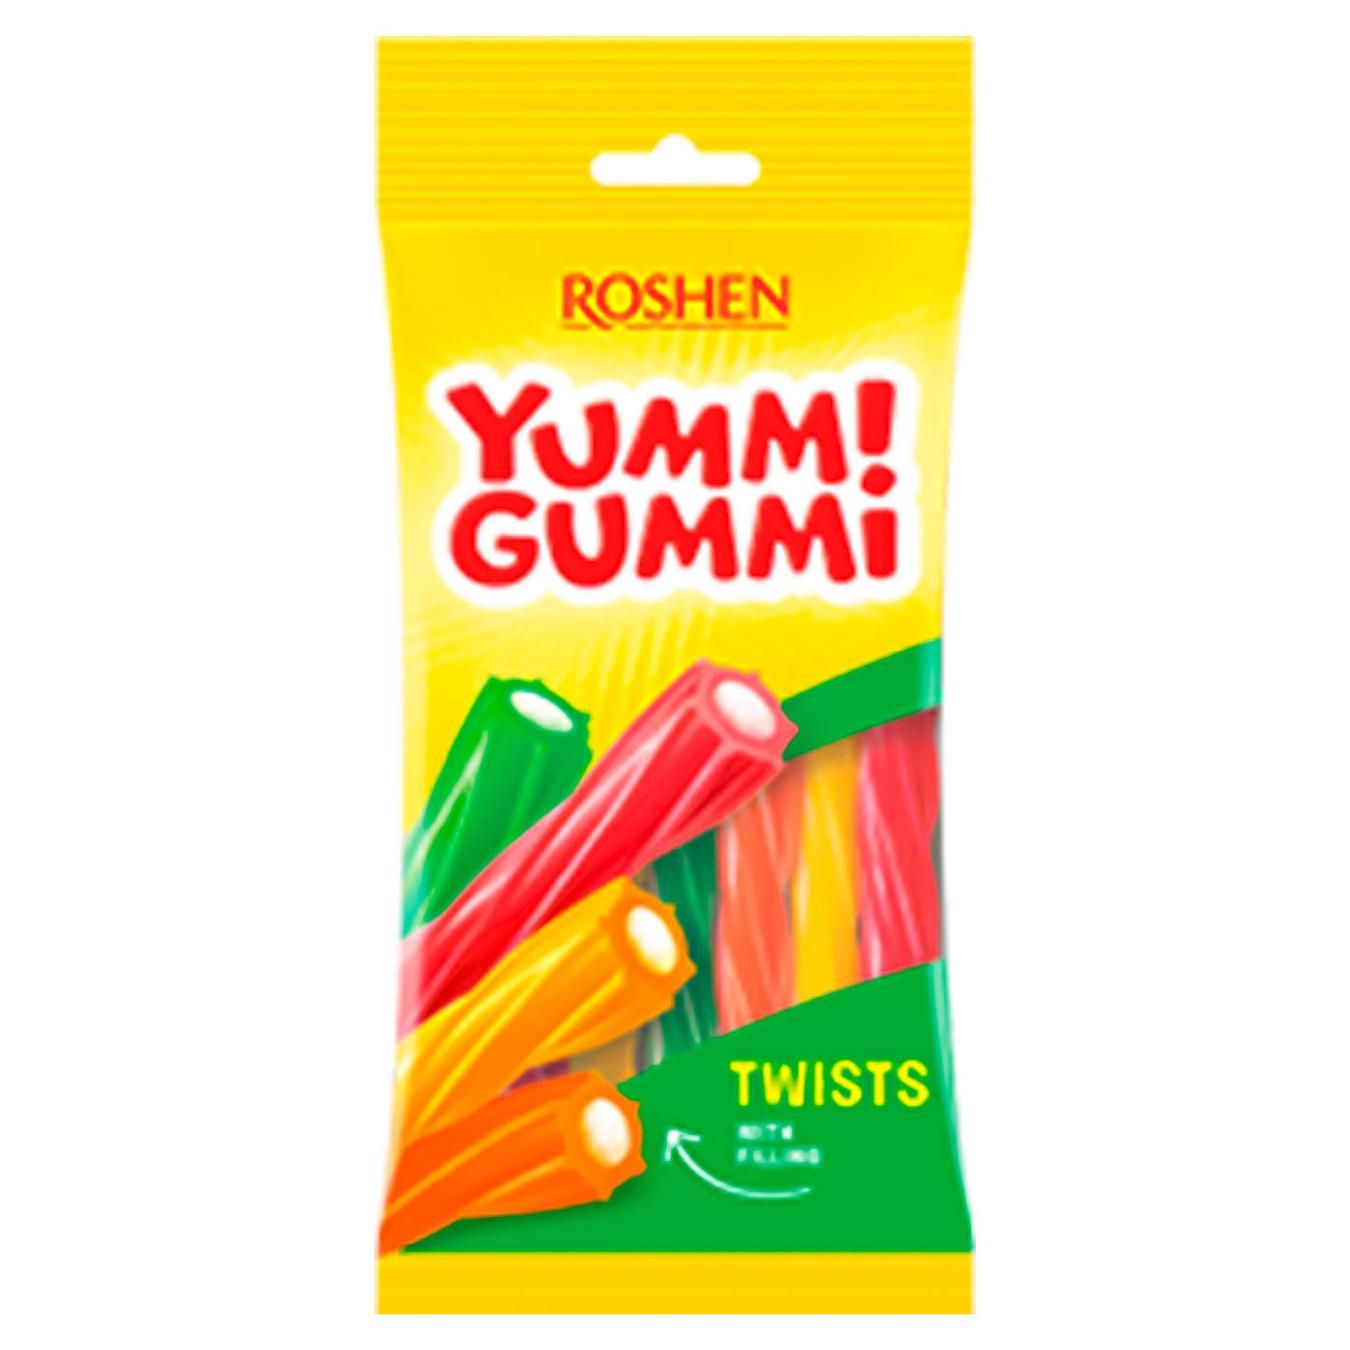 Roshen Yummi Gummi Twists jelly candies 70g